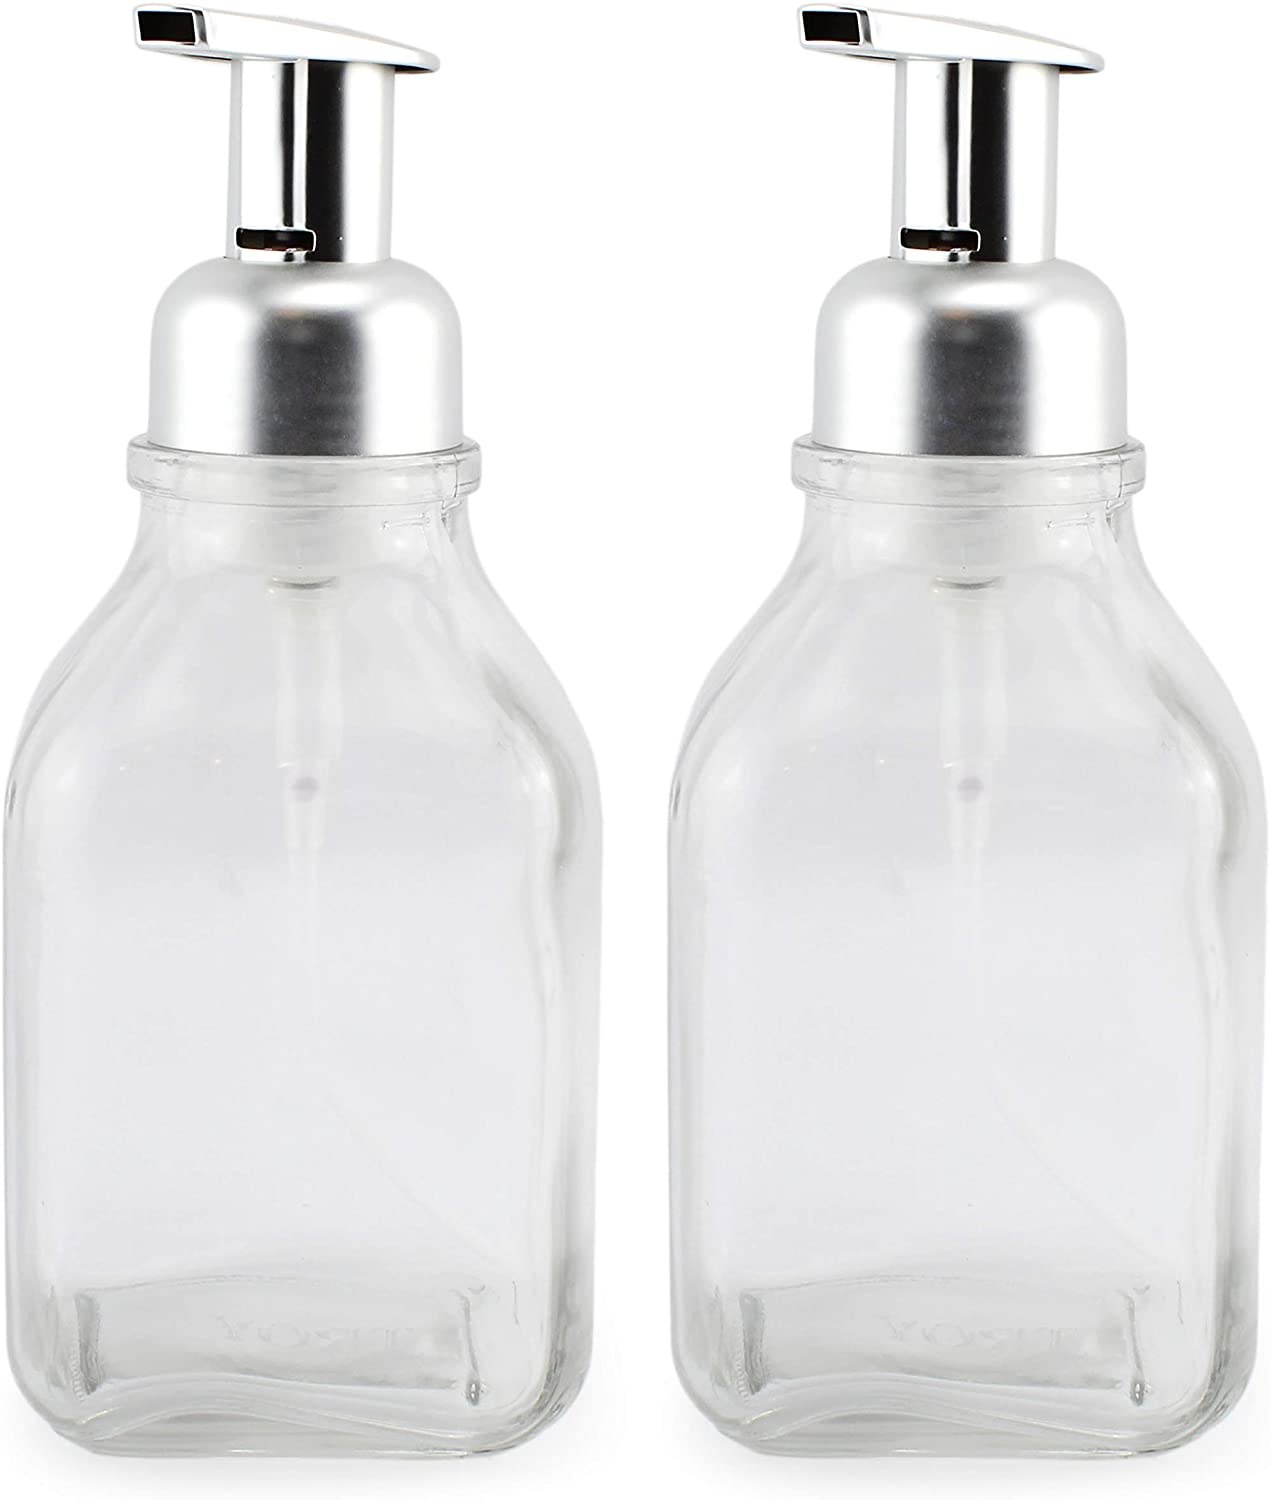 16oz Square Glass Foaming Soap Dispensers (2-Pack)